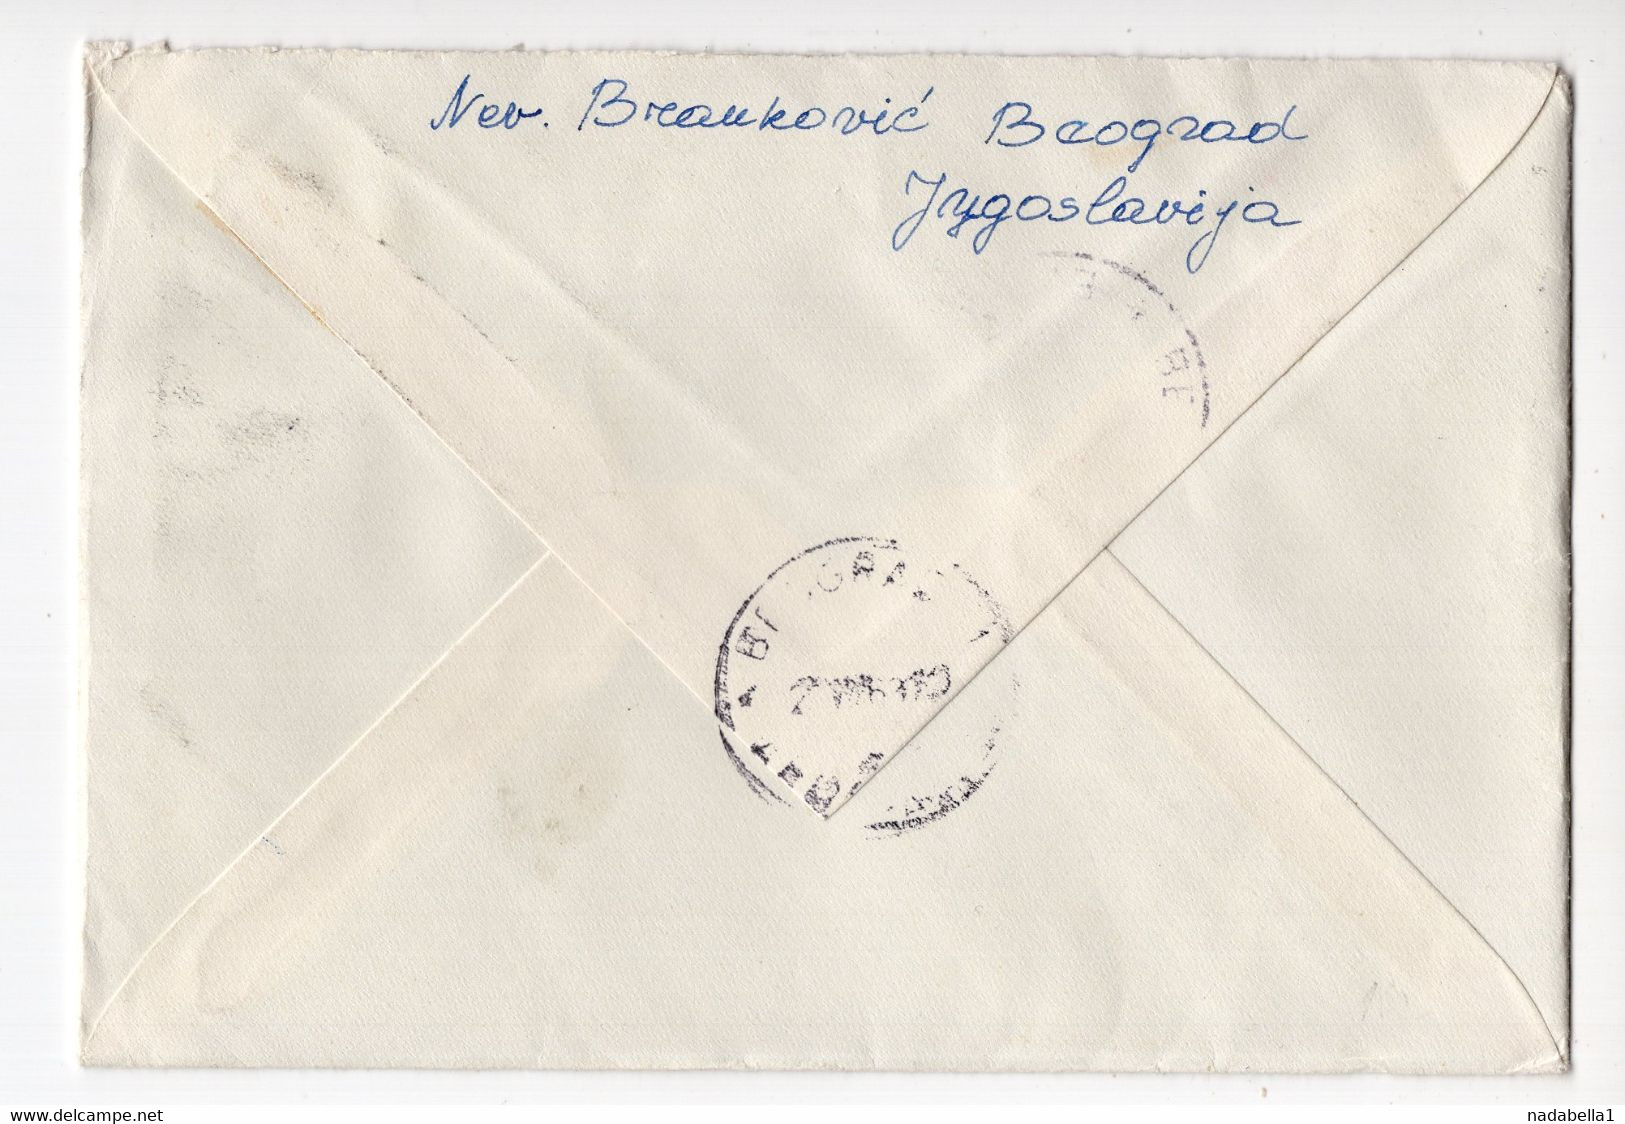 1965. YUGOSLAVIA,SERBIA,BELGRADE,AIRMAIL,REGISTERED COVER TO SWITZERLAND - Airmail